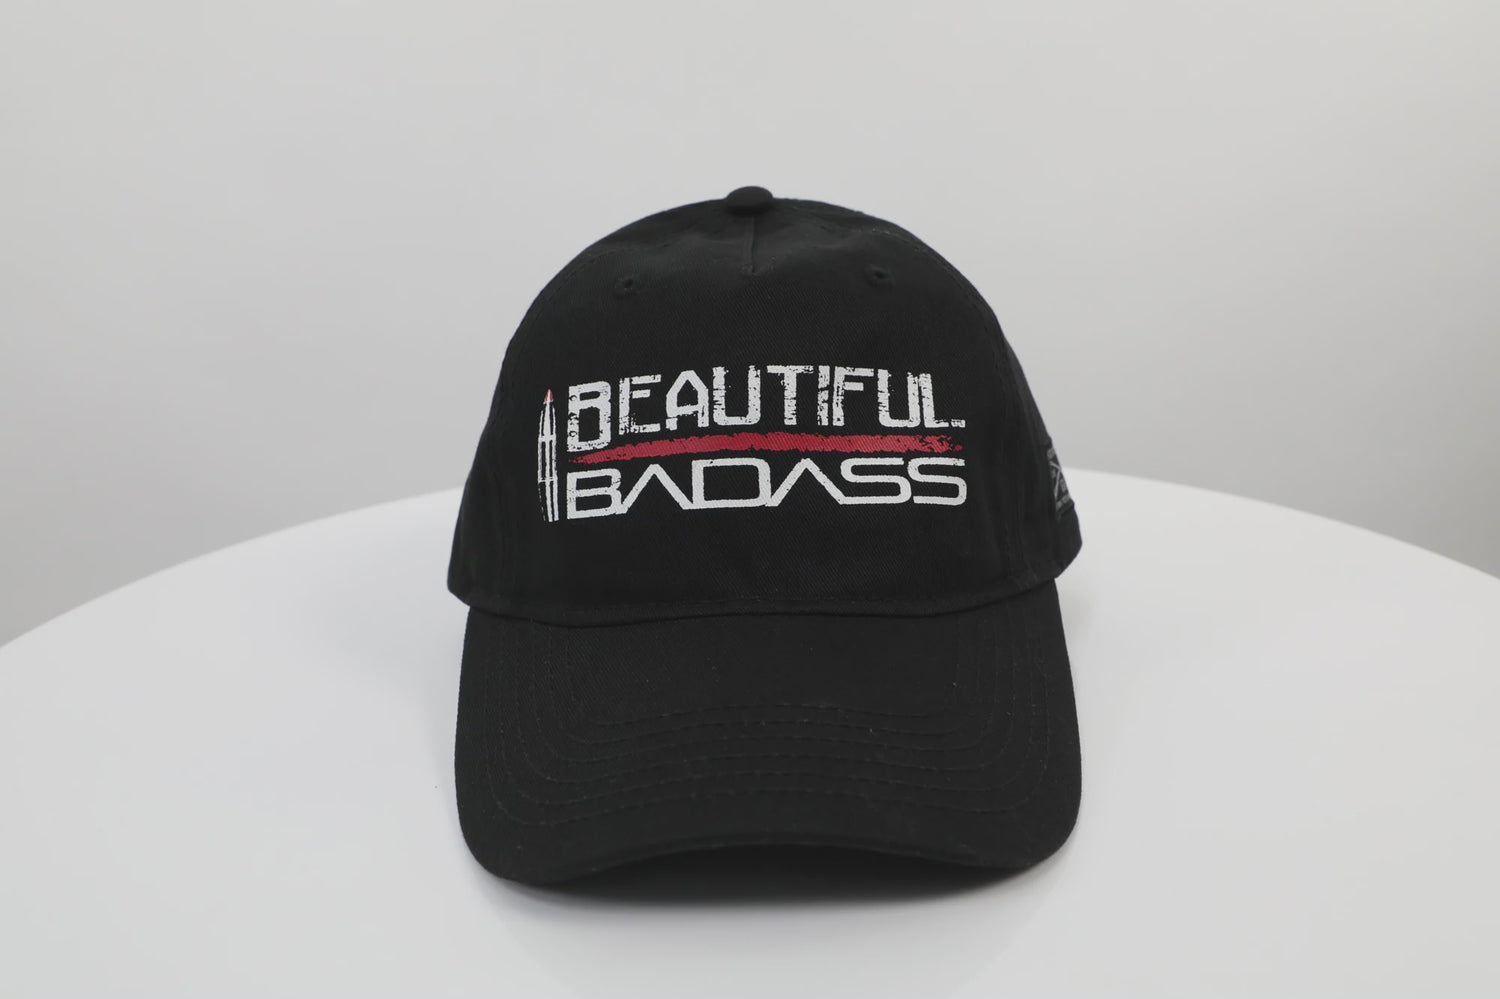 Full Beautiful Badass Hat Video | Grunt Style 